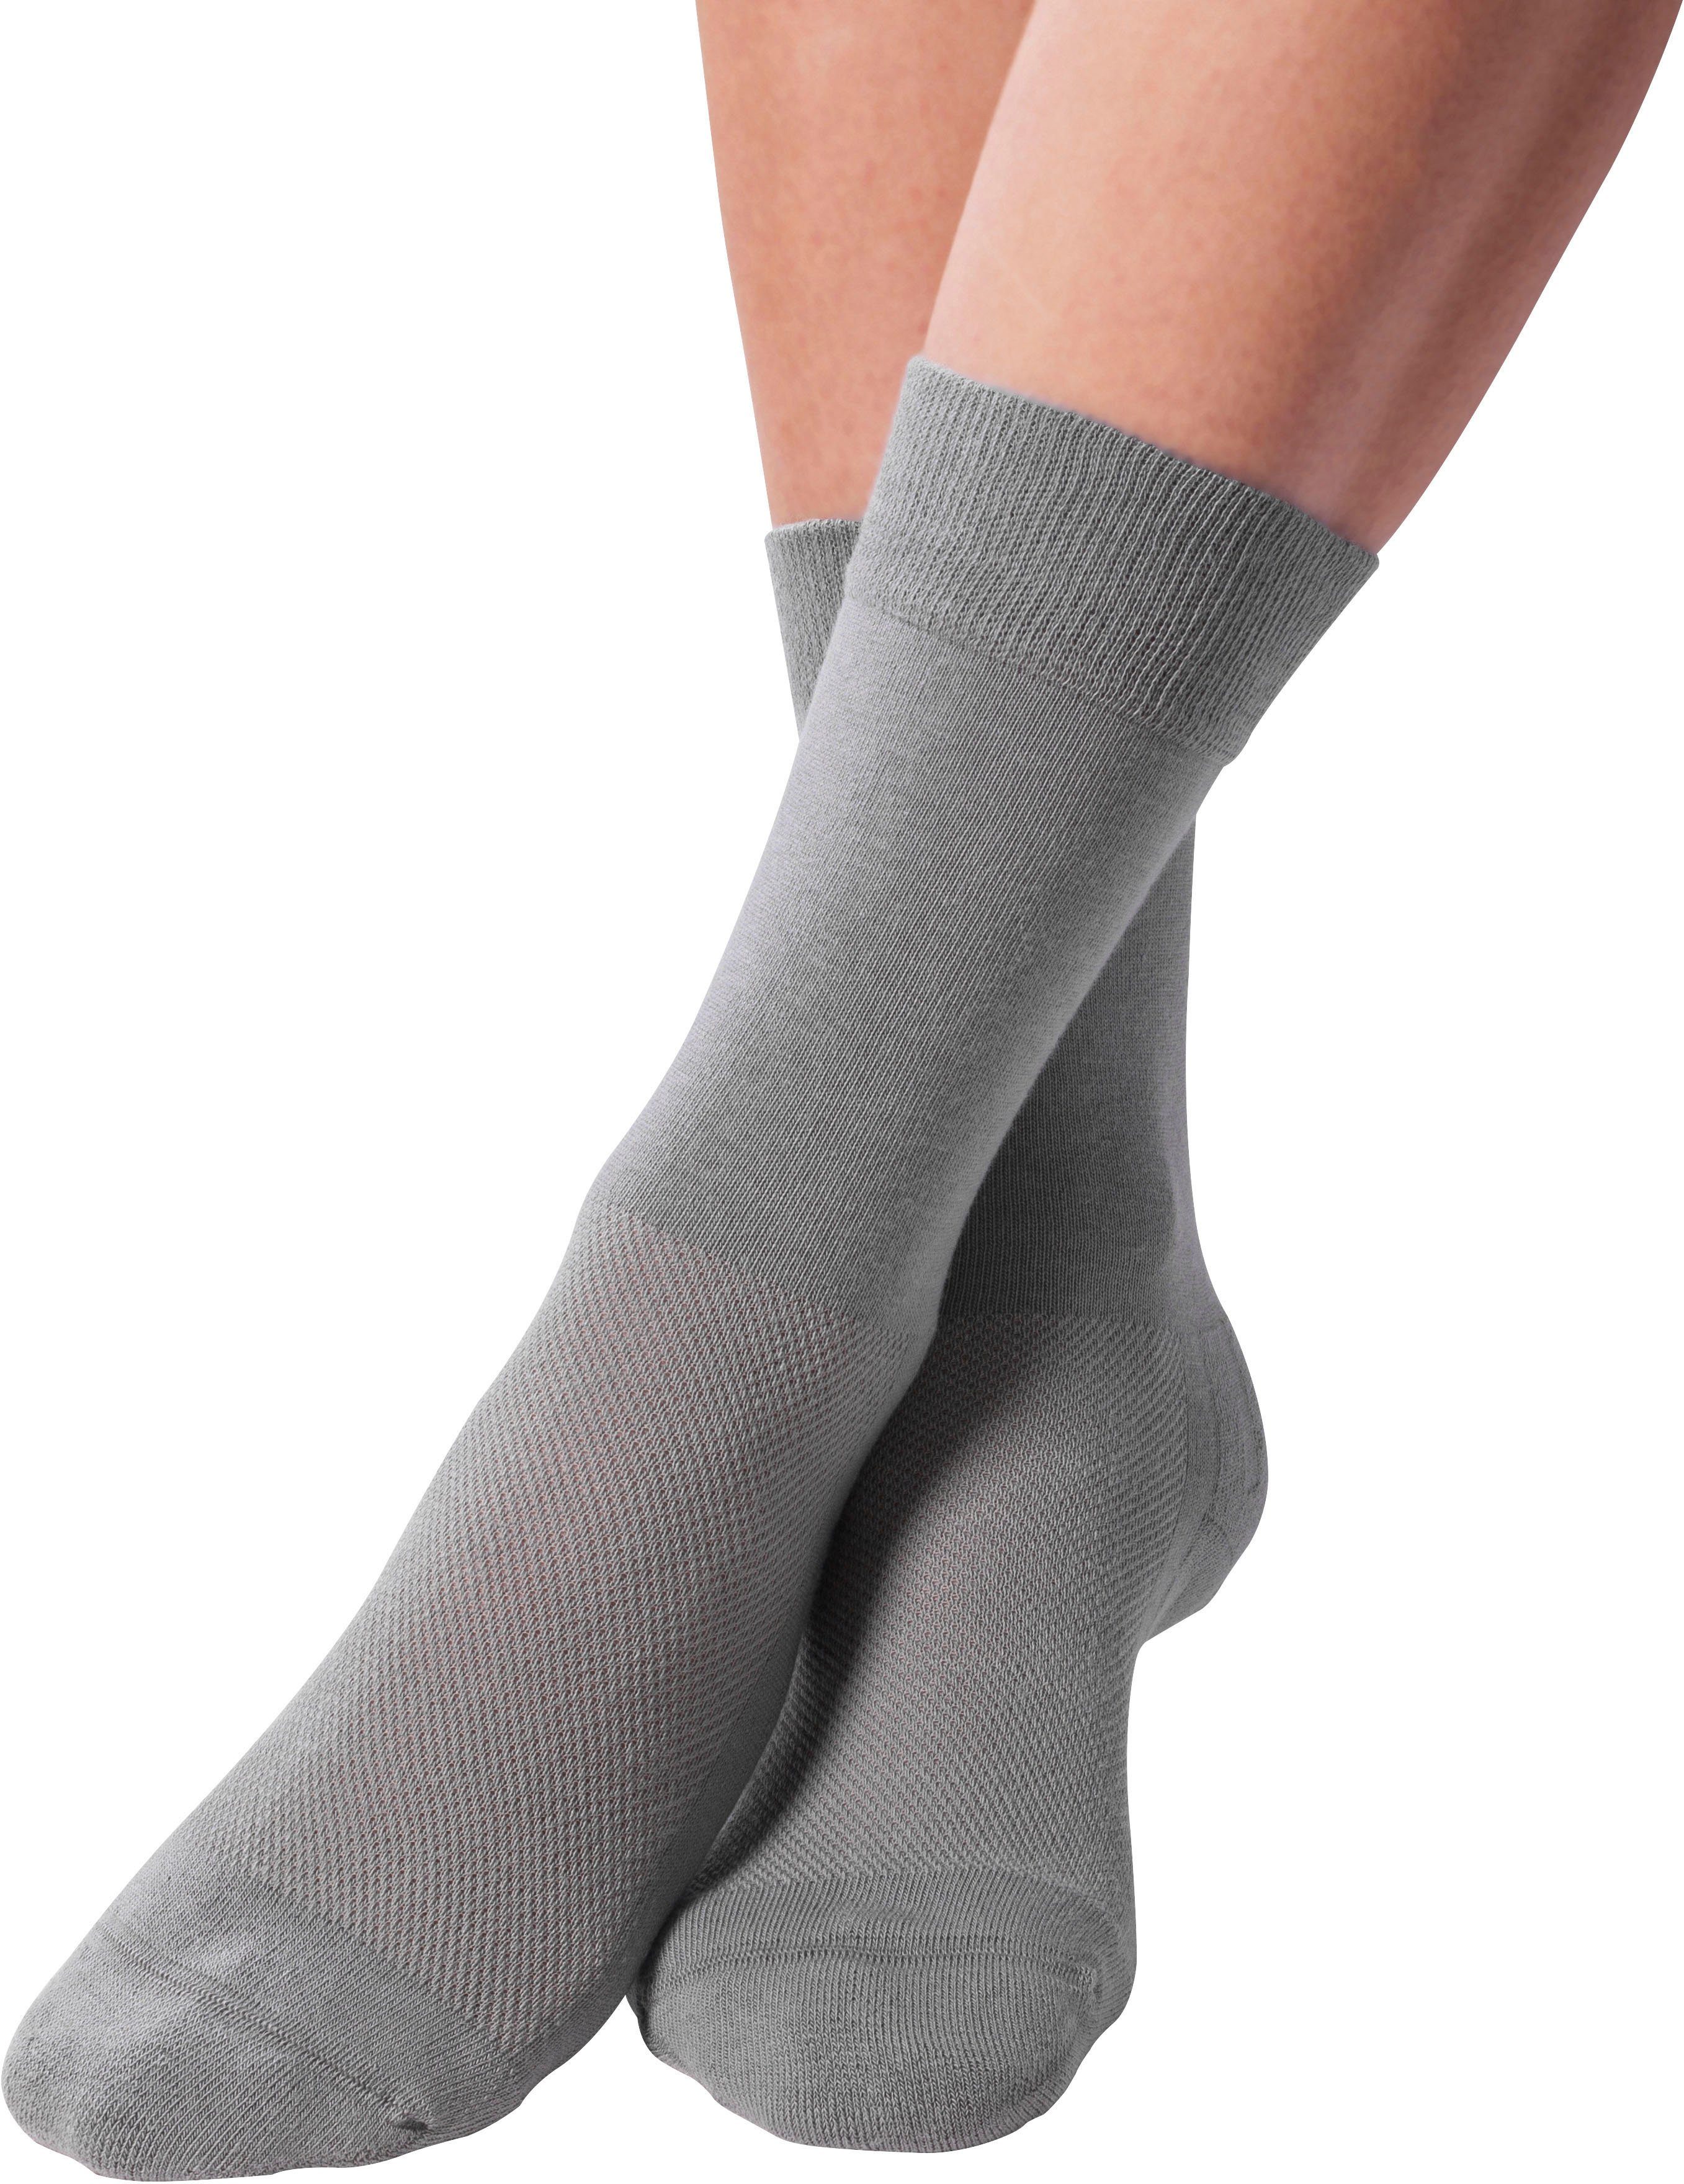 Venenfeund Fußgut grau (2-Paar) Socken Sensitiv Diabetikersocken